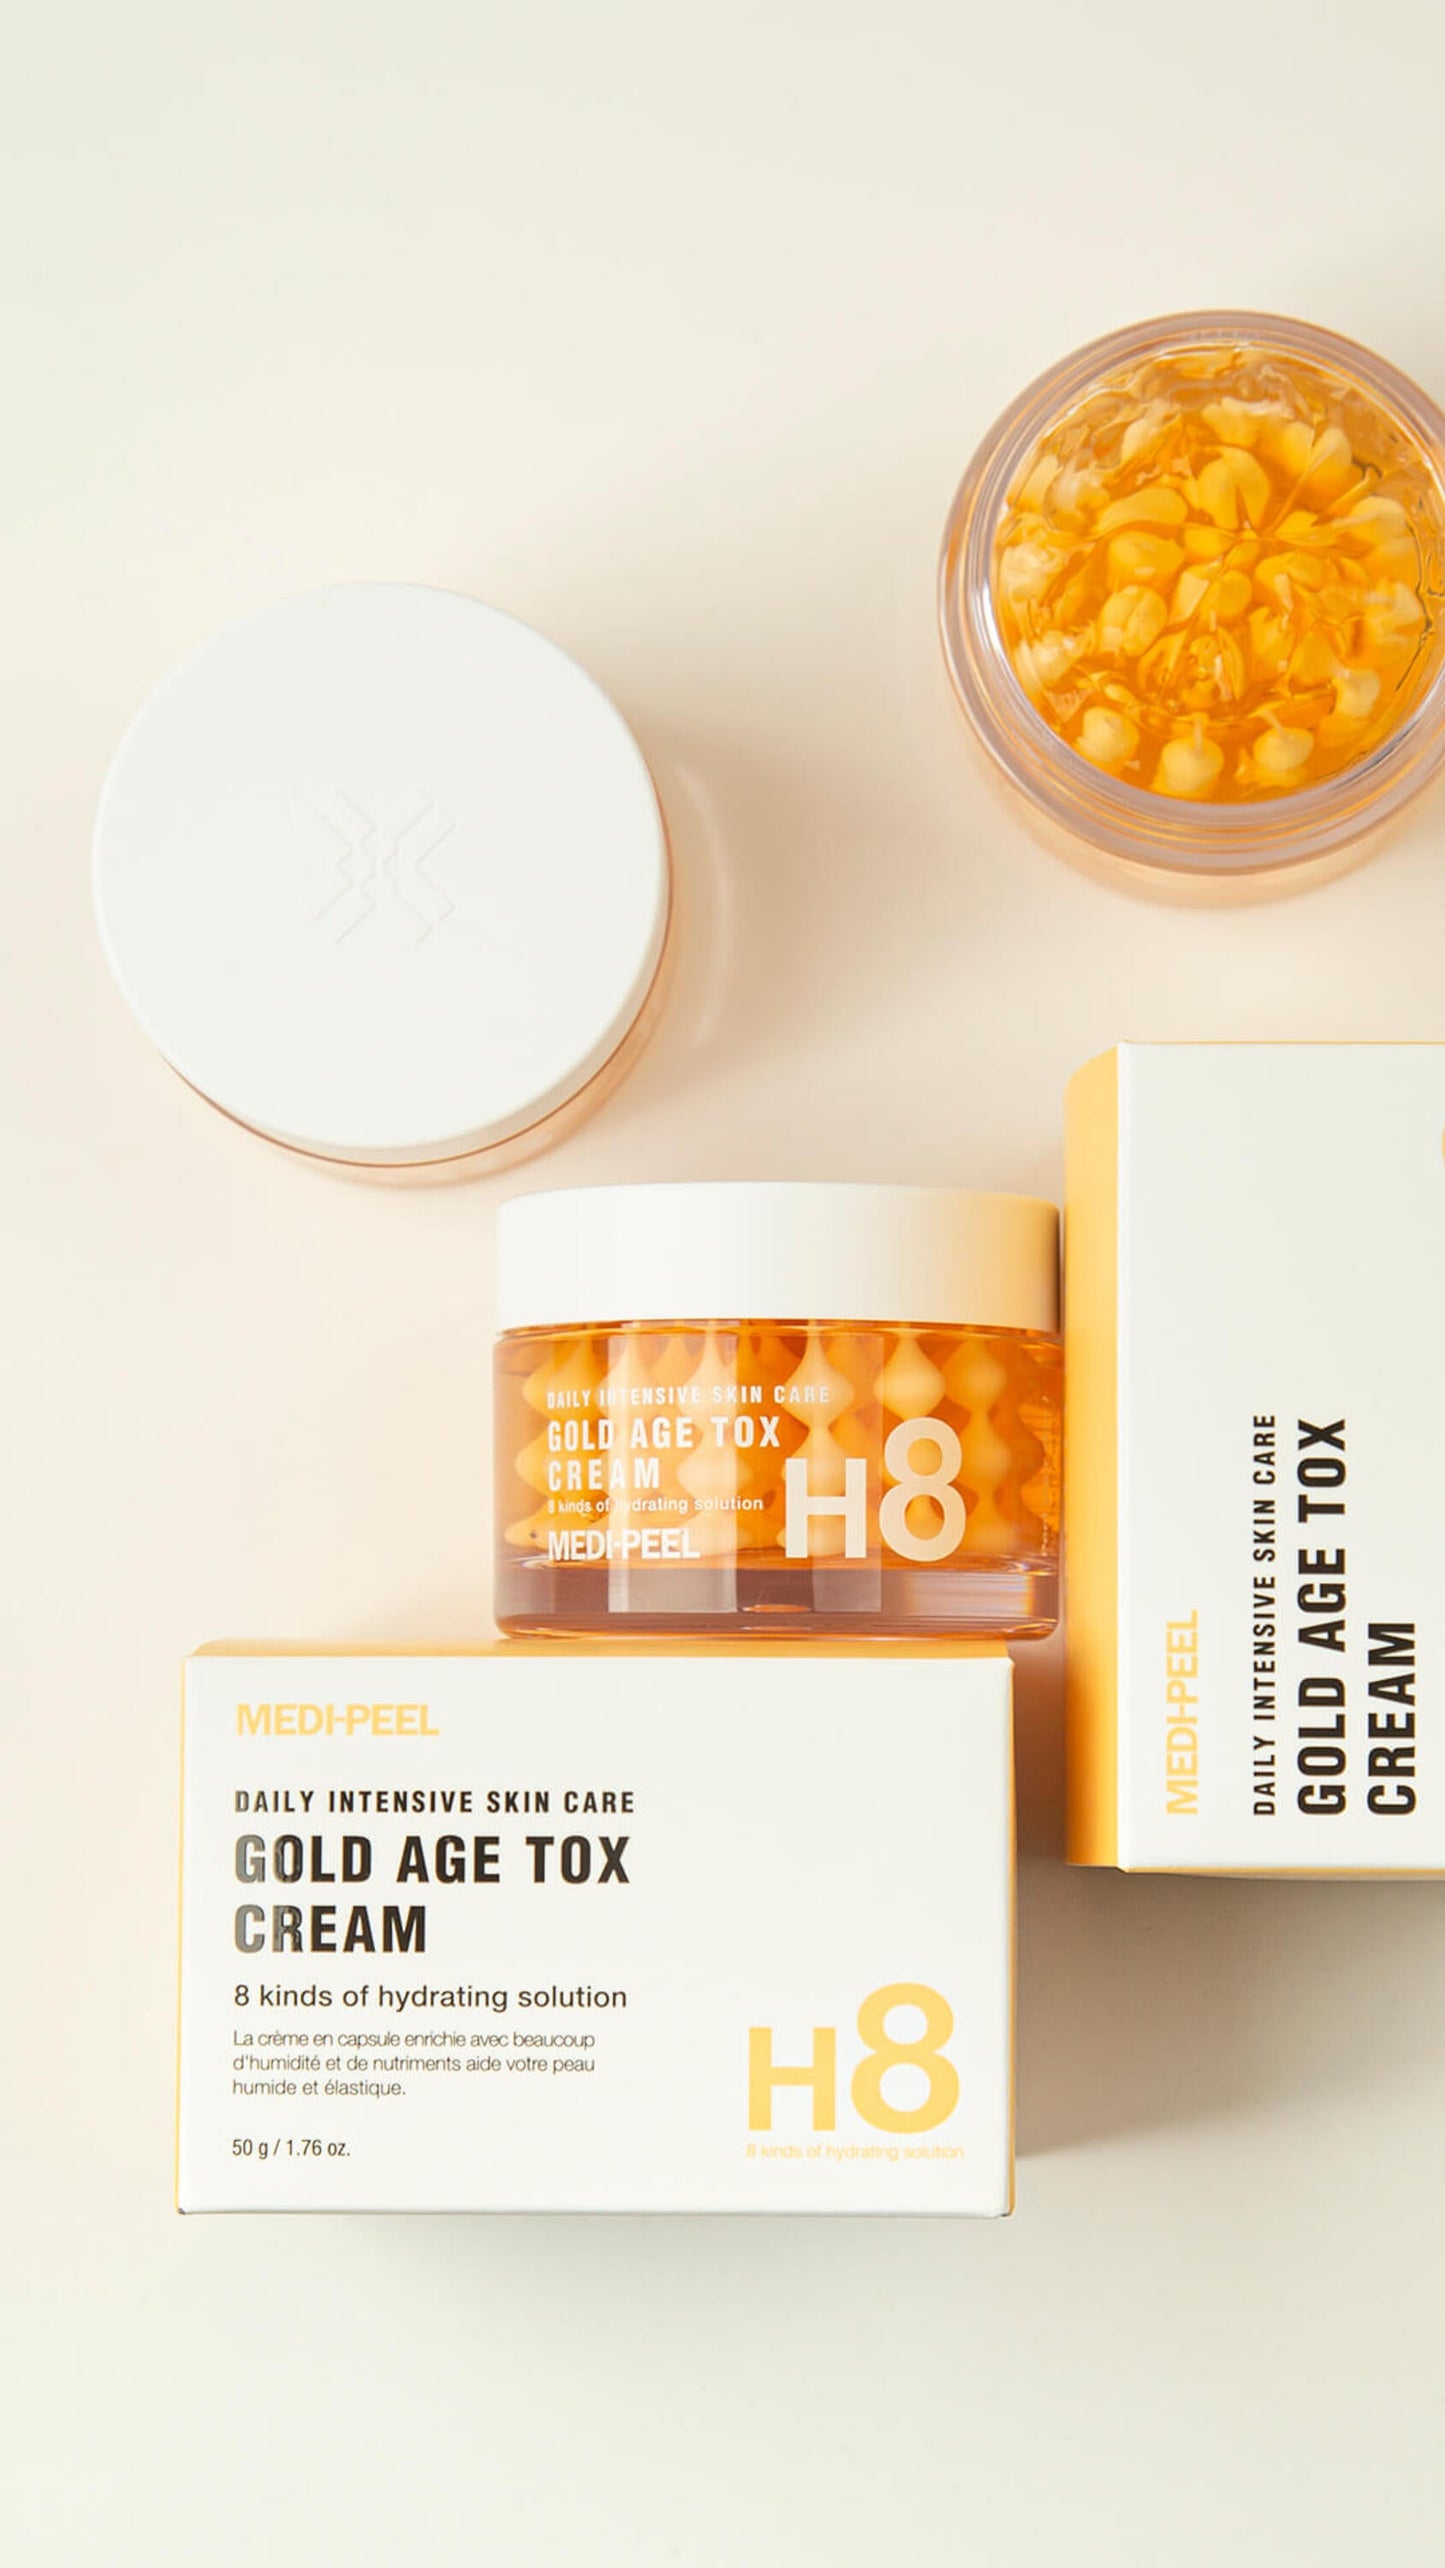 Medipeel Gold Age Tox H8 Cream